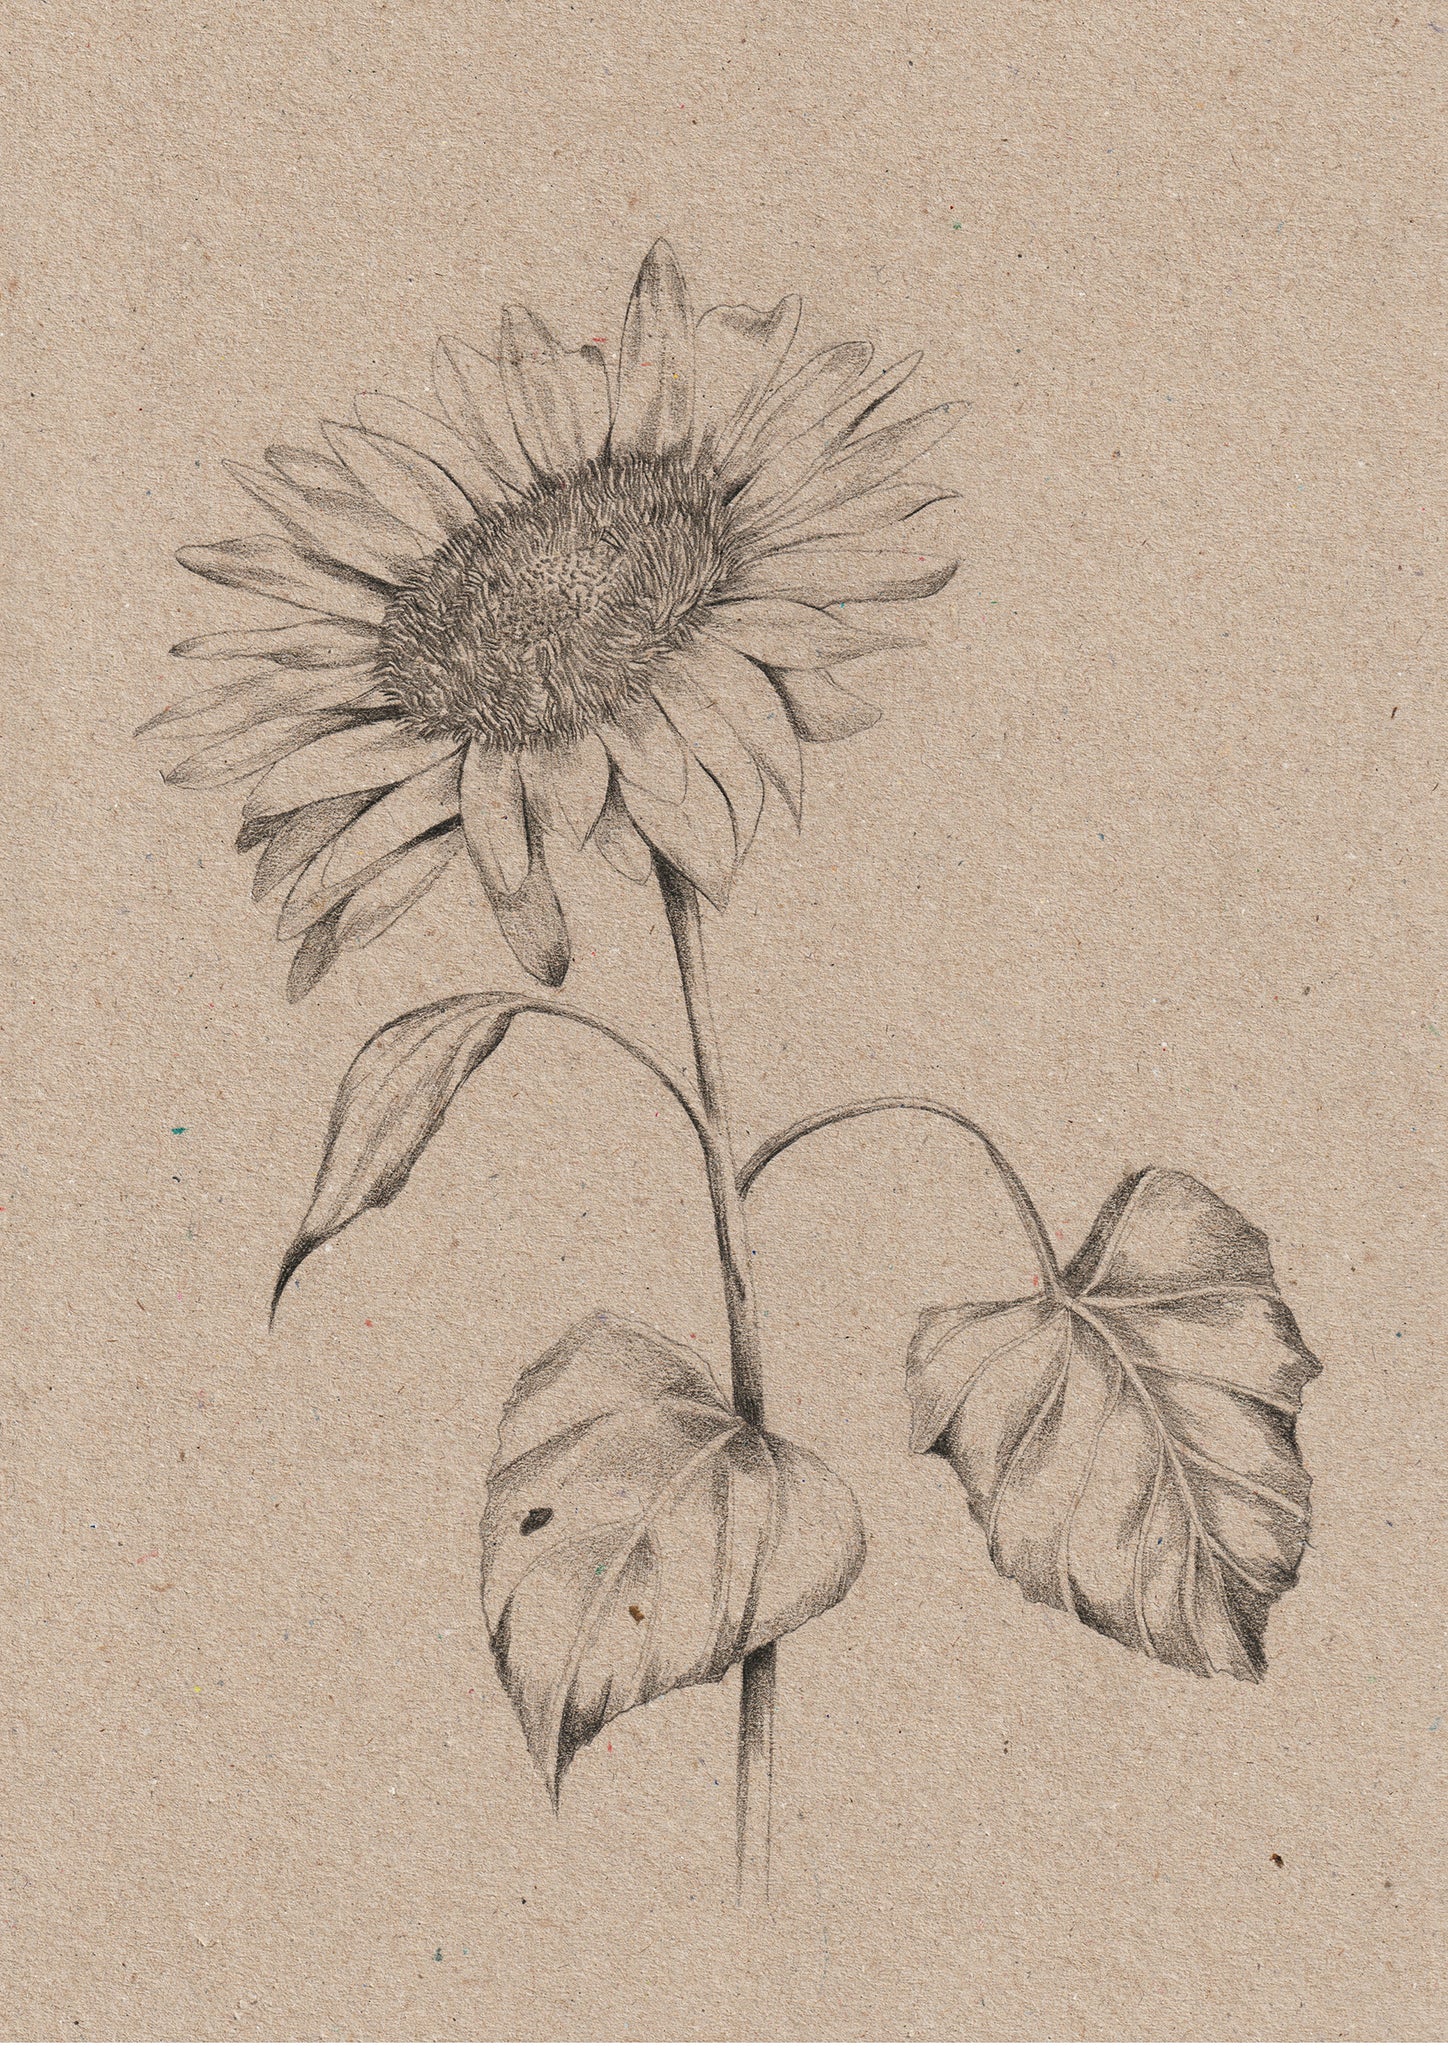 Kelly thompson botanical illustration illustrator for The Avanyguard Sunglasses